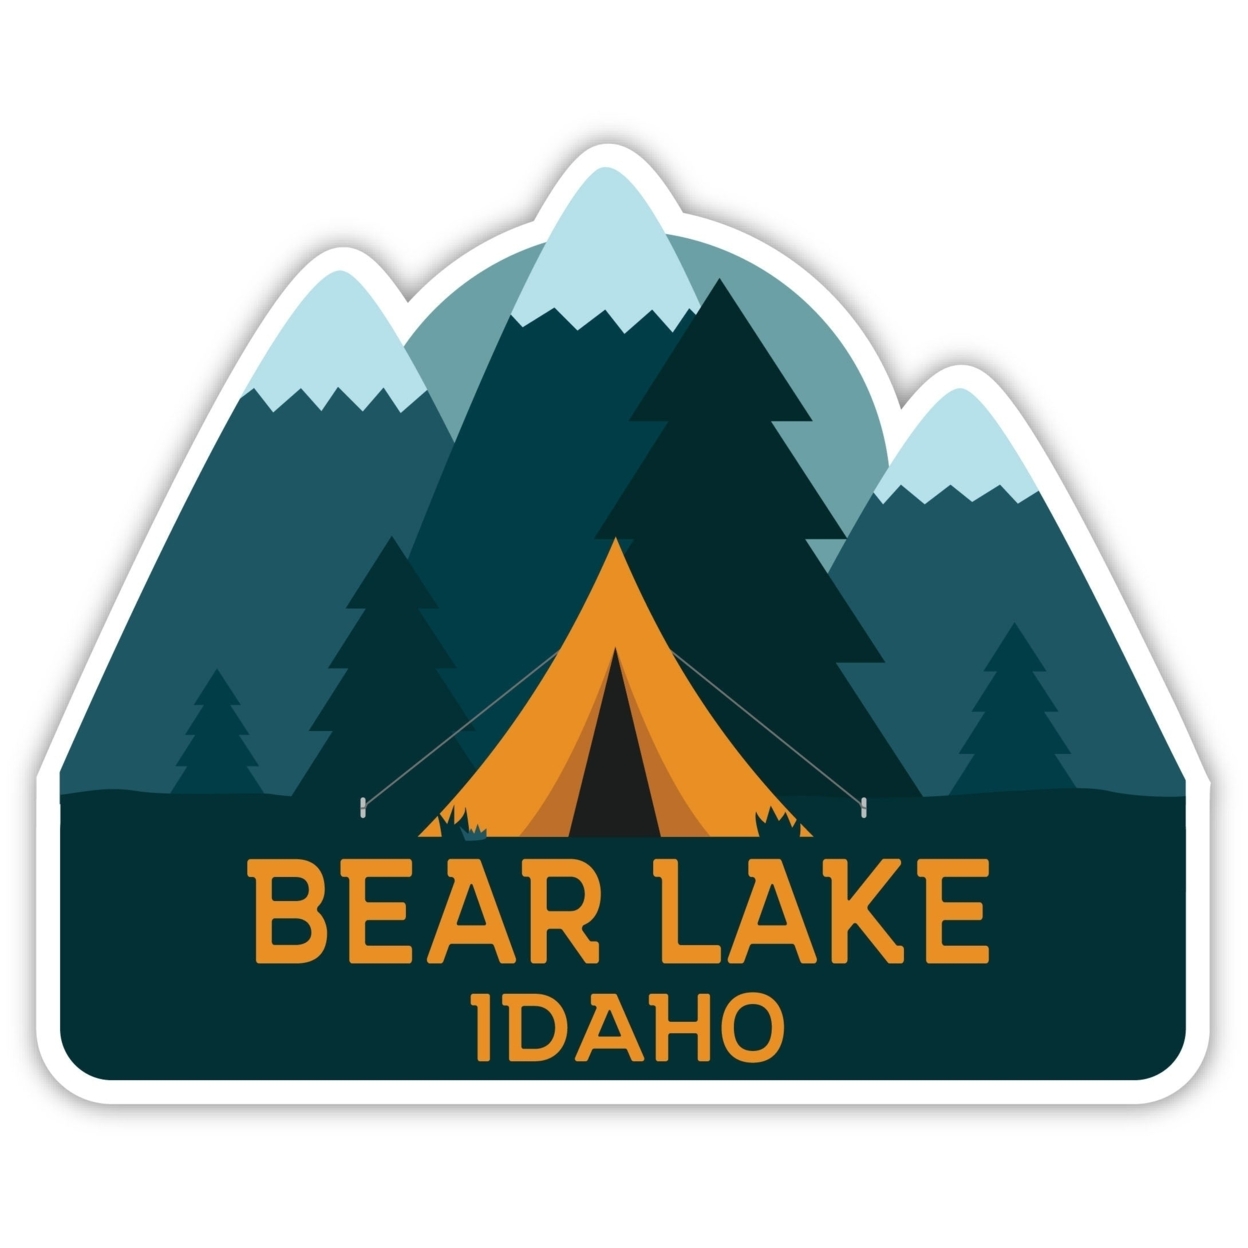 Bear Lake Idaho Souvenir Decorative Stickers (Choose Theme And Size) - Single Unit, 2-Inch, Adventures Awaits